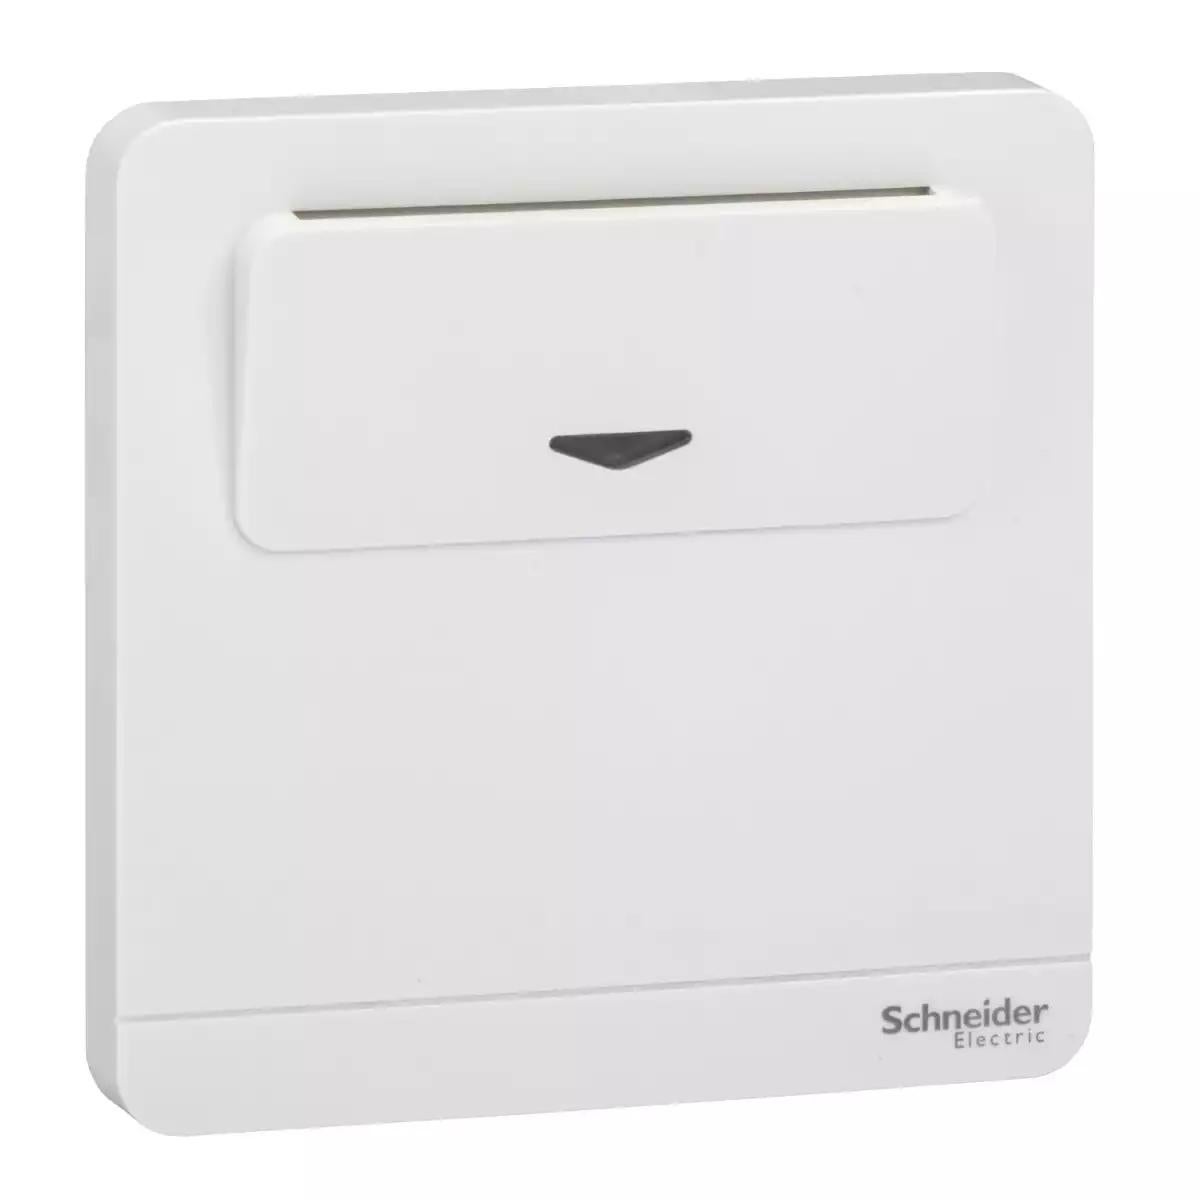 Schneider Electric AvatarOn card switch, 16 A, 250 V, White